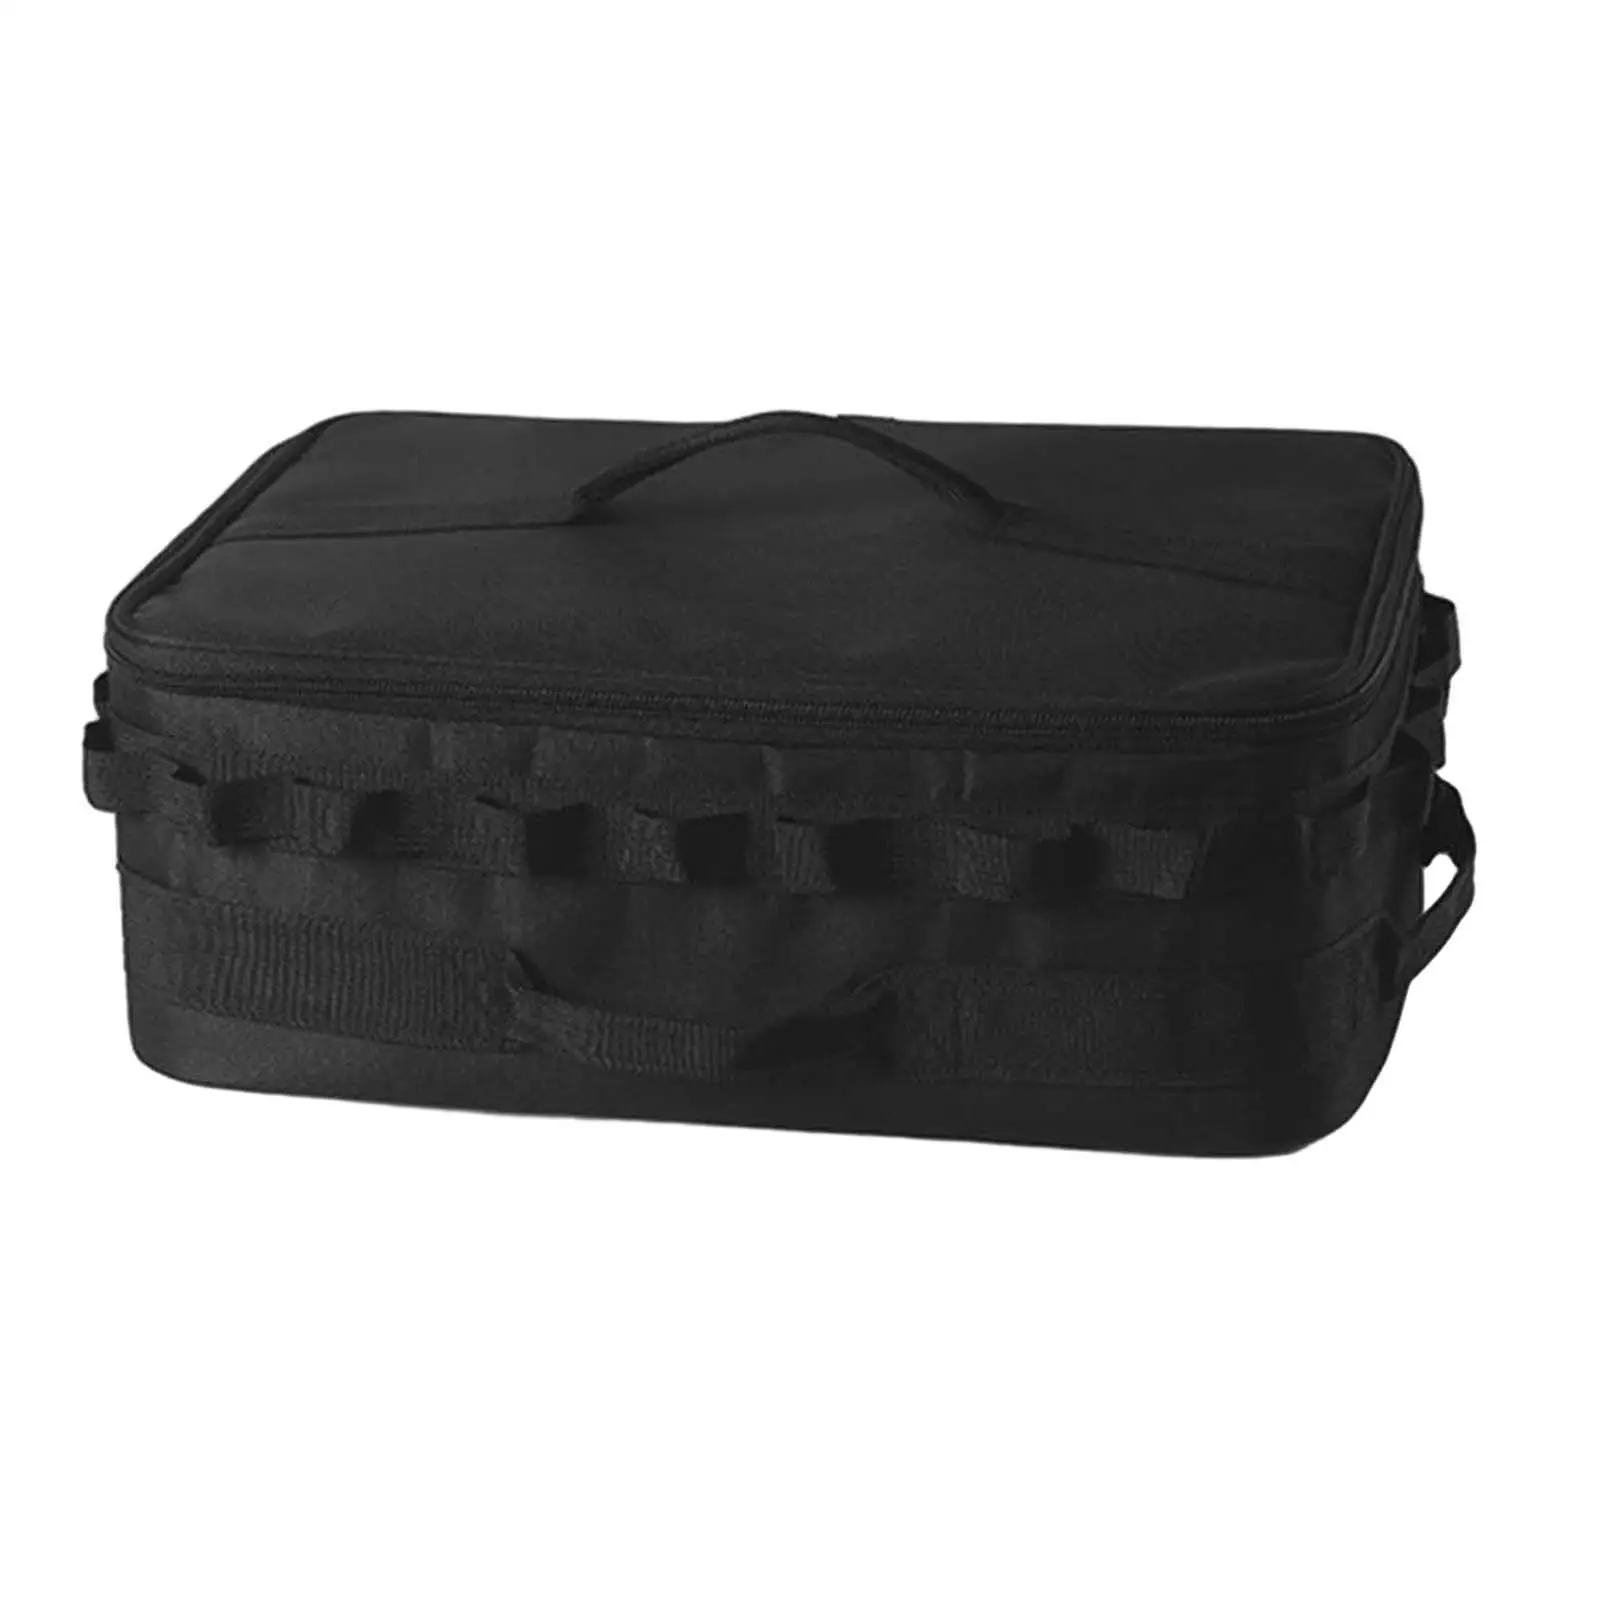 Gas Tank Storage Bag Handbag Large Capacity Organizer with Mesh Pocket Grill Carrying Bag for Hiking Party BBQ Travel Trip